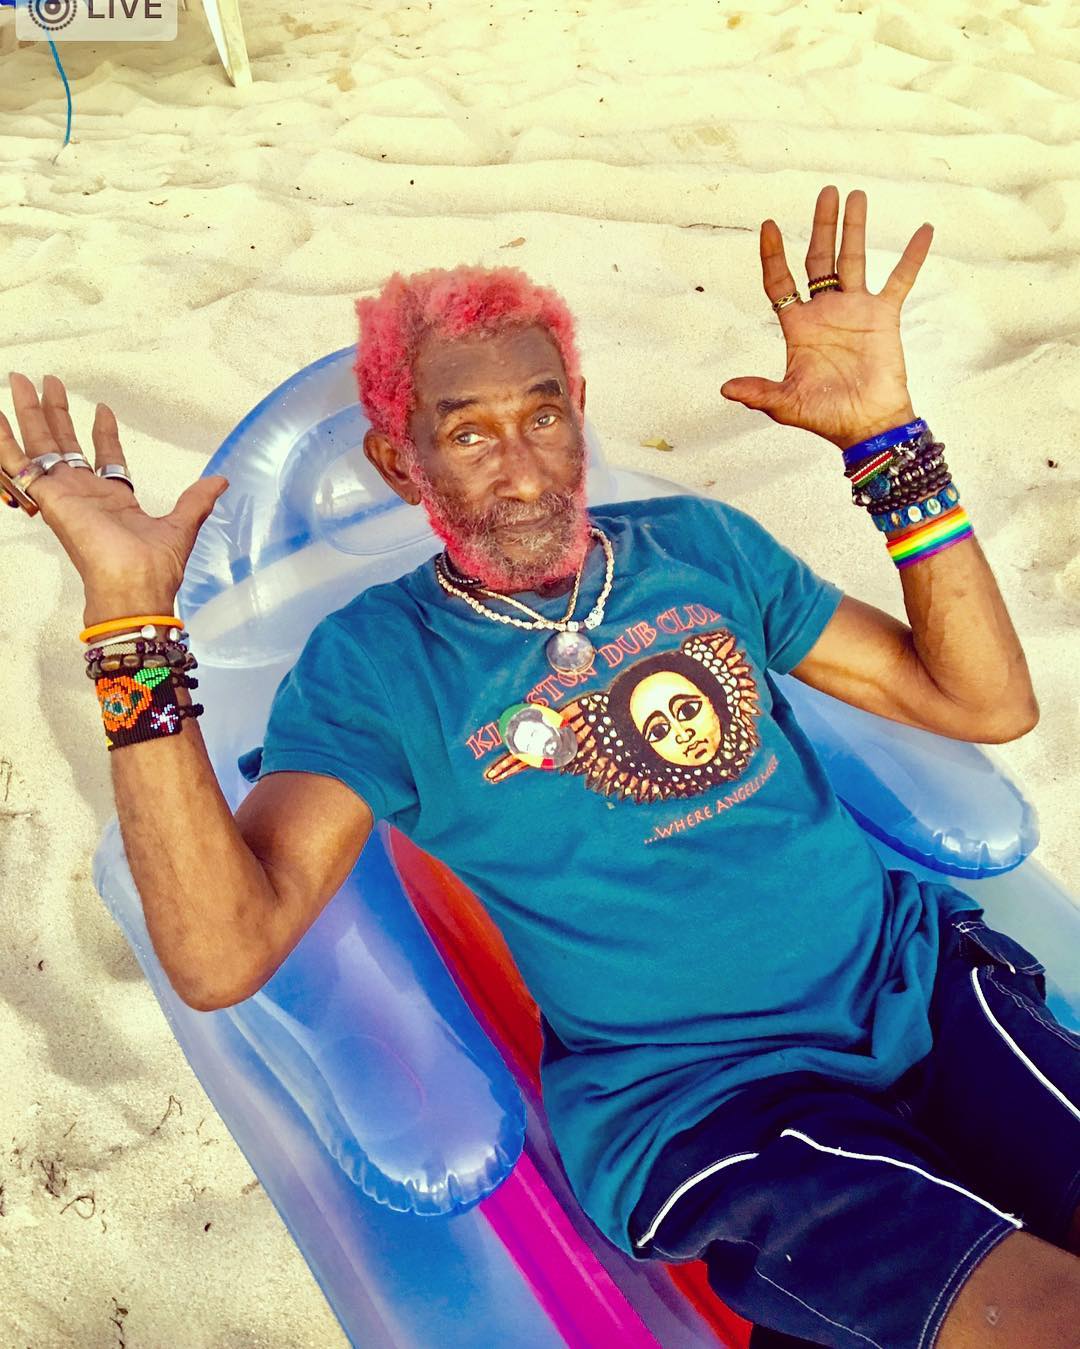 Reggae dub pioneer Lee “Scratch” Perry has died at age 85